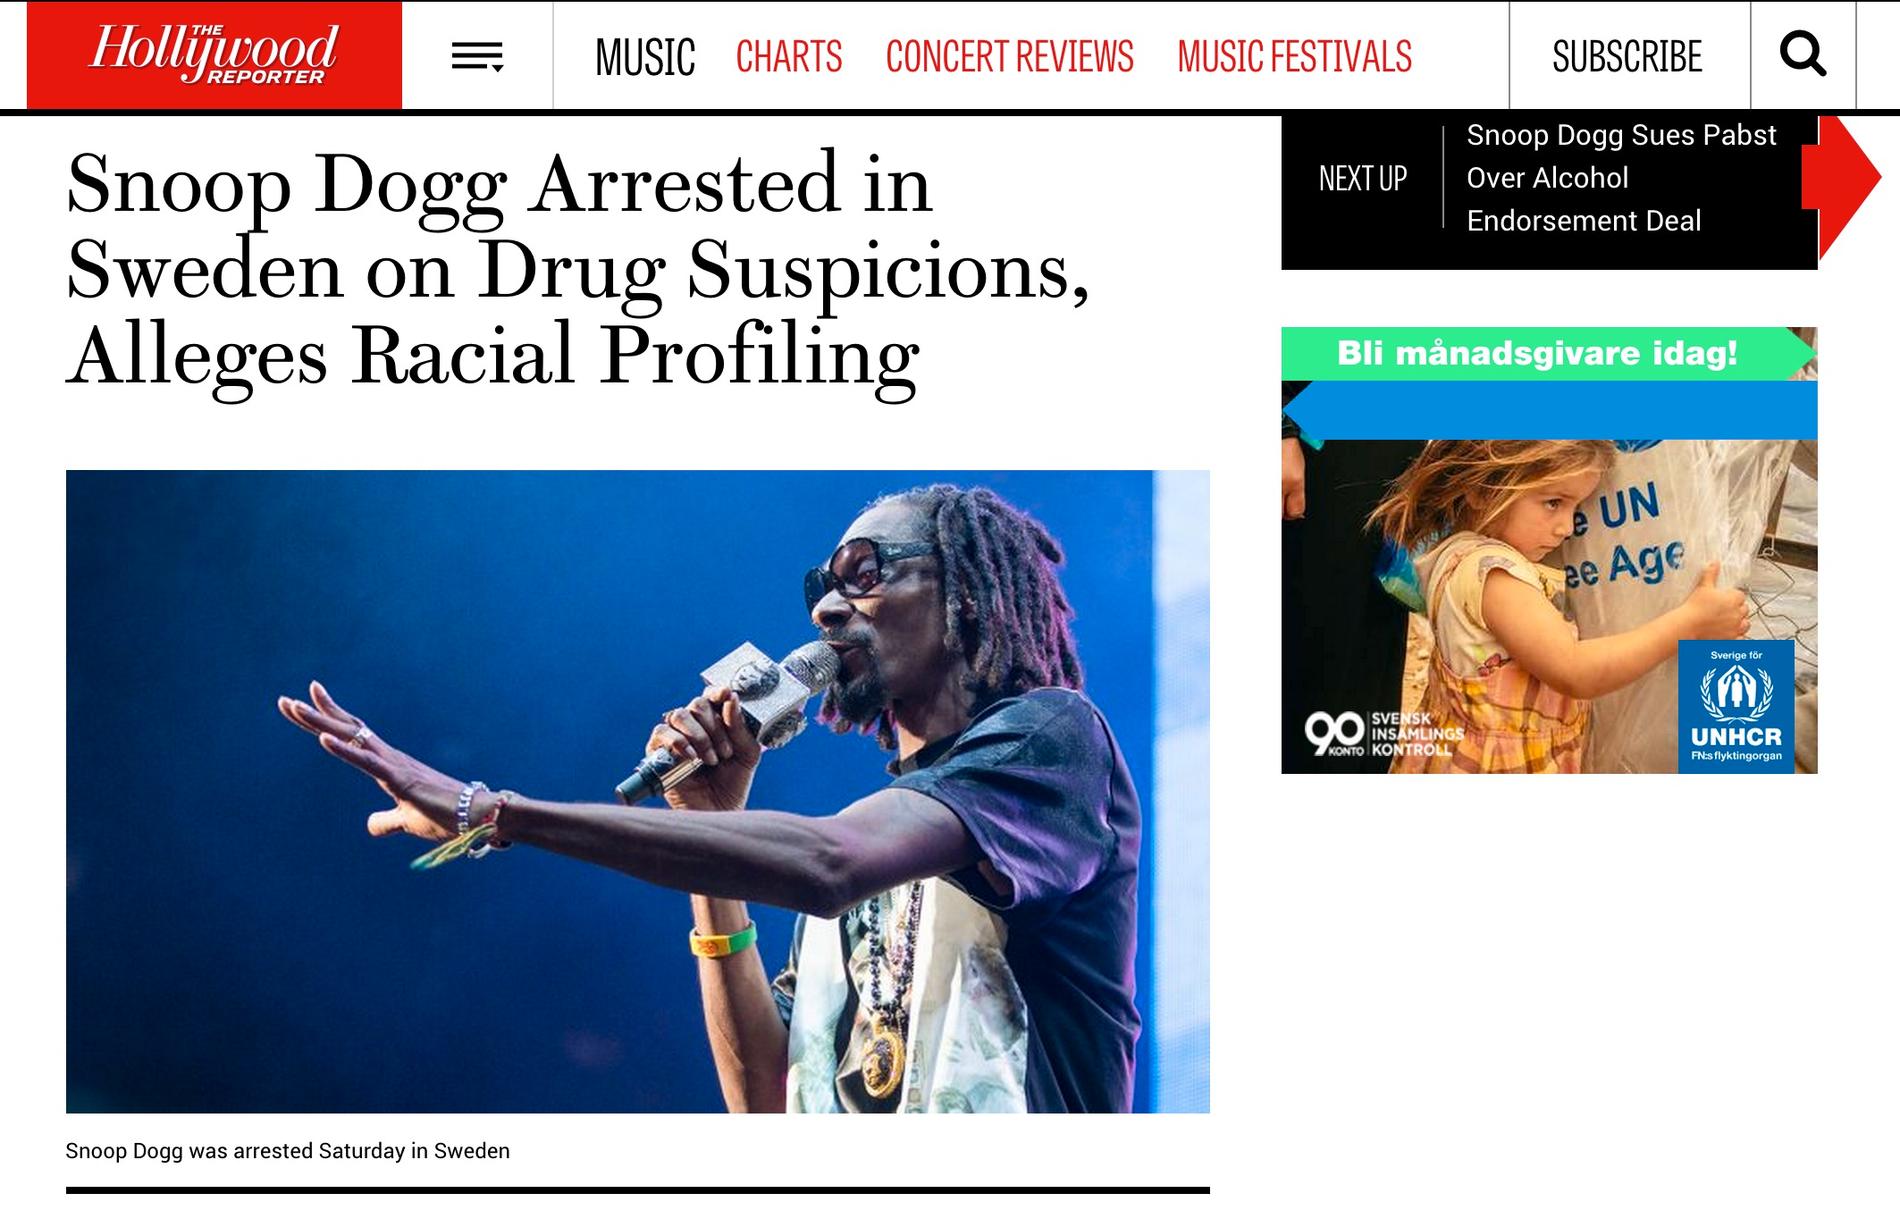 Hollywood Reporter Snoop Dogg Arrested in Sweden on Drug Suspicions, Alleges Racial Profiling